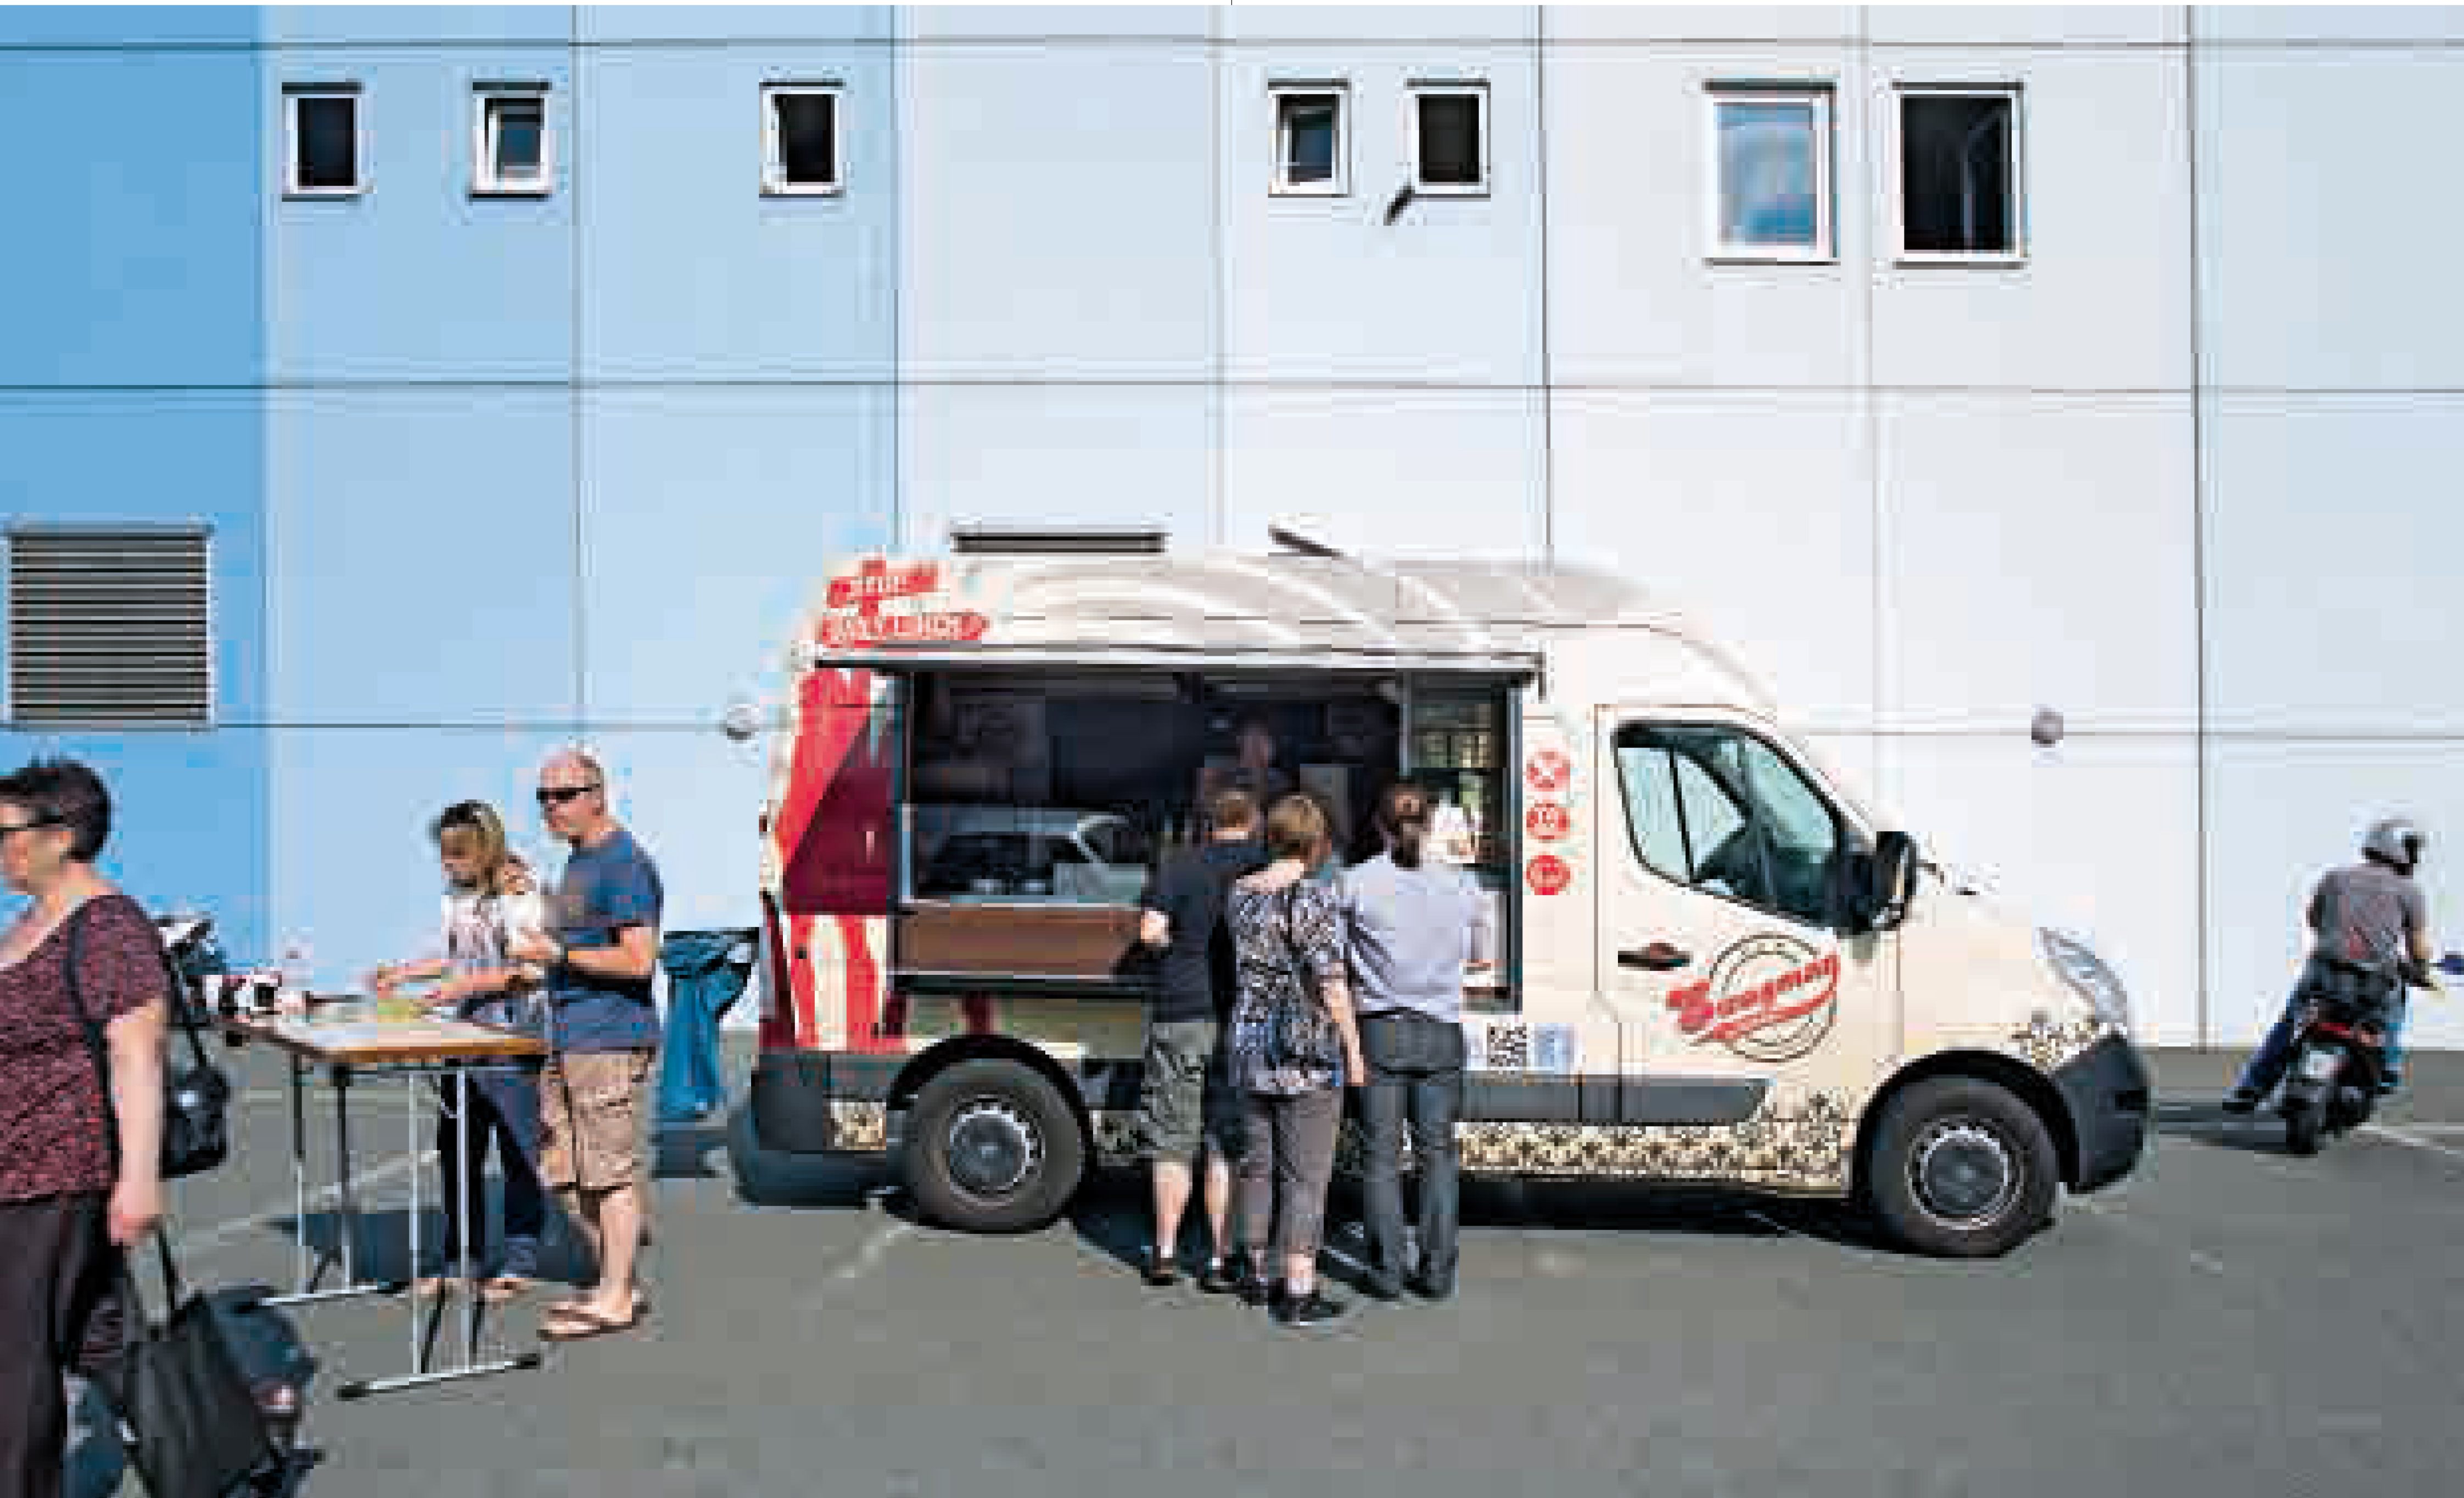 Swagman bayreuth / N ü rnberg || Food Trucks ||Pressebilder || Copywright: Toby Binder 